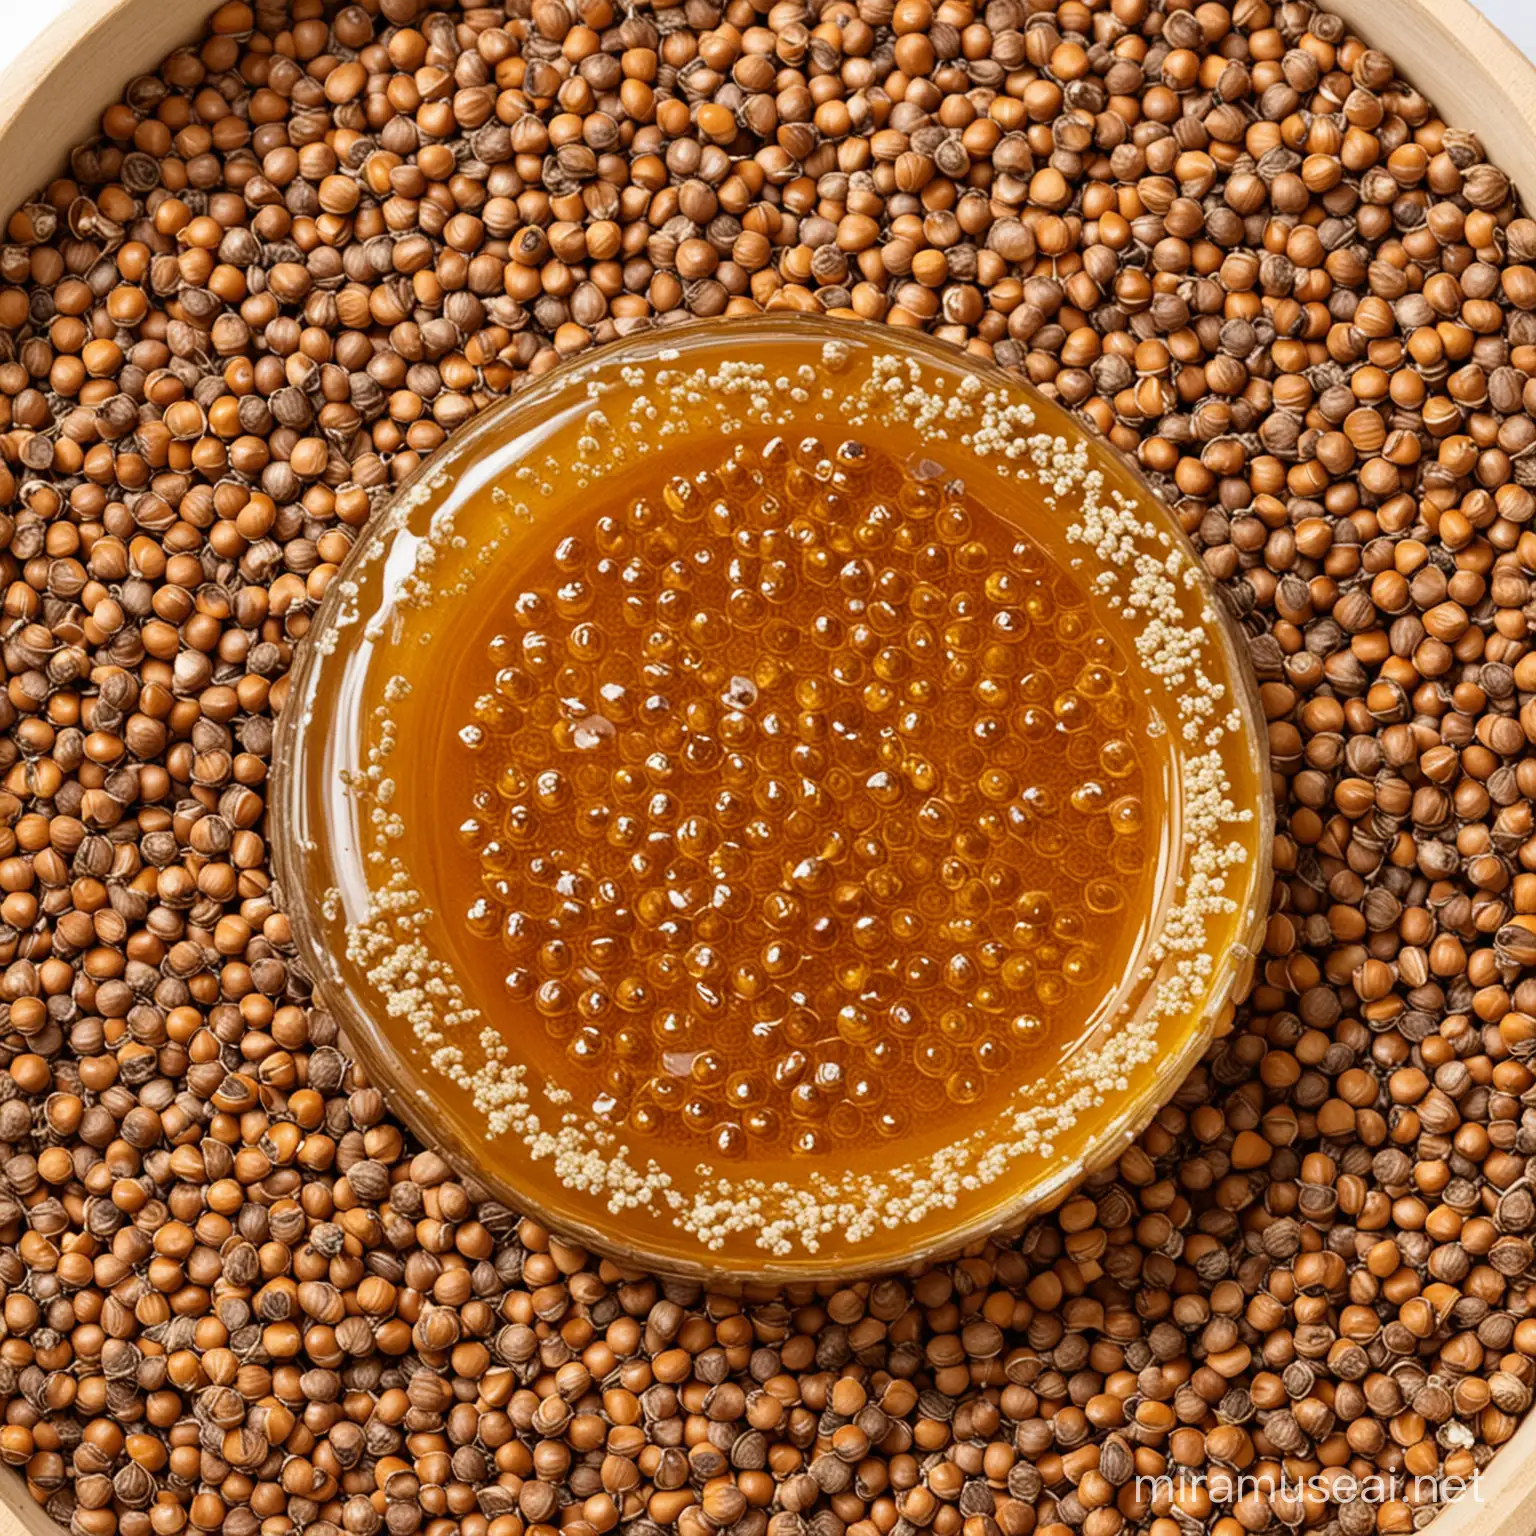 Images of buckwheat honey